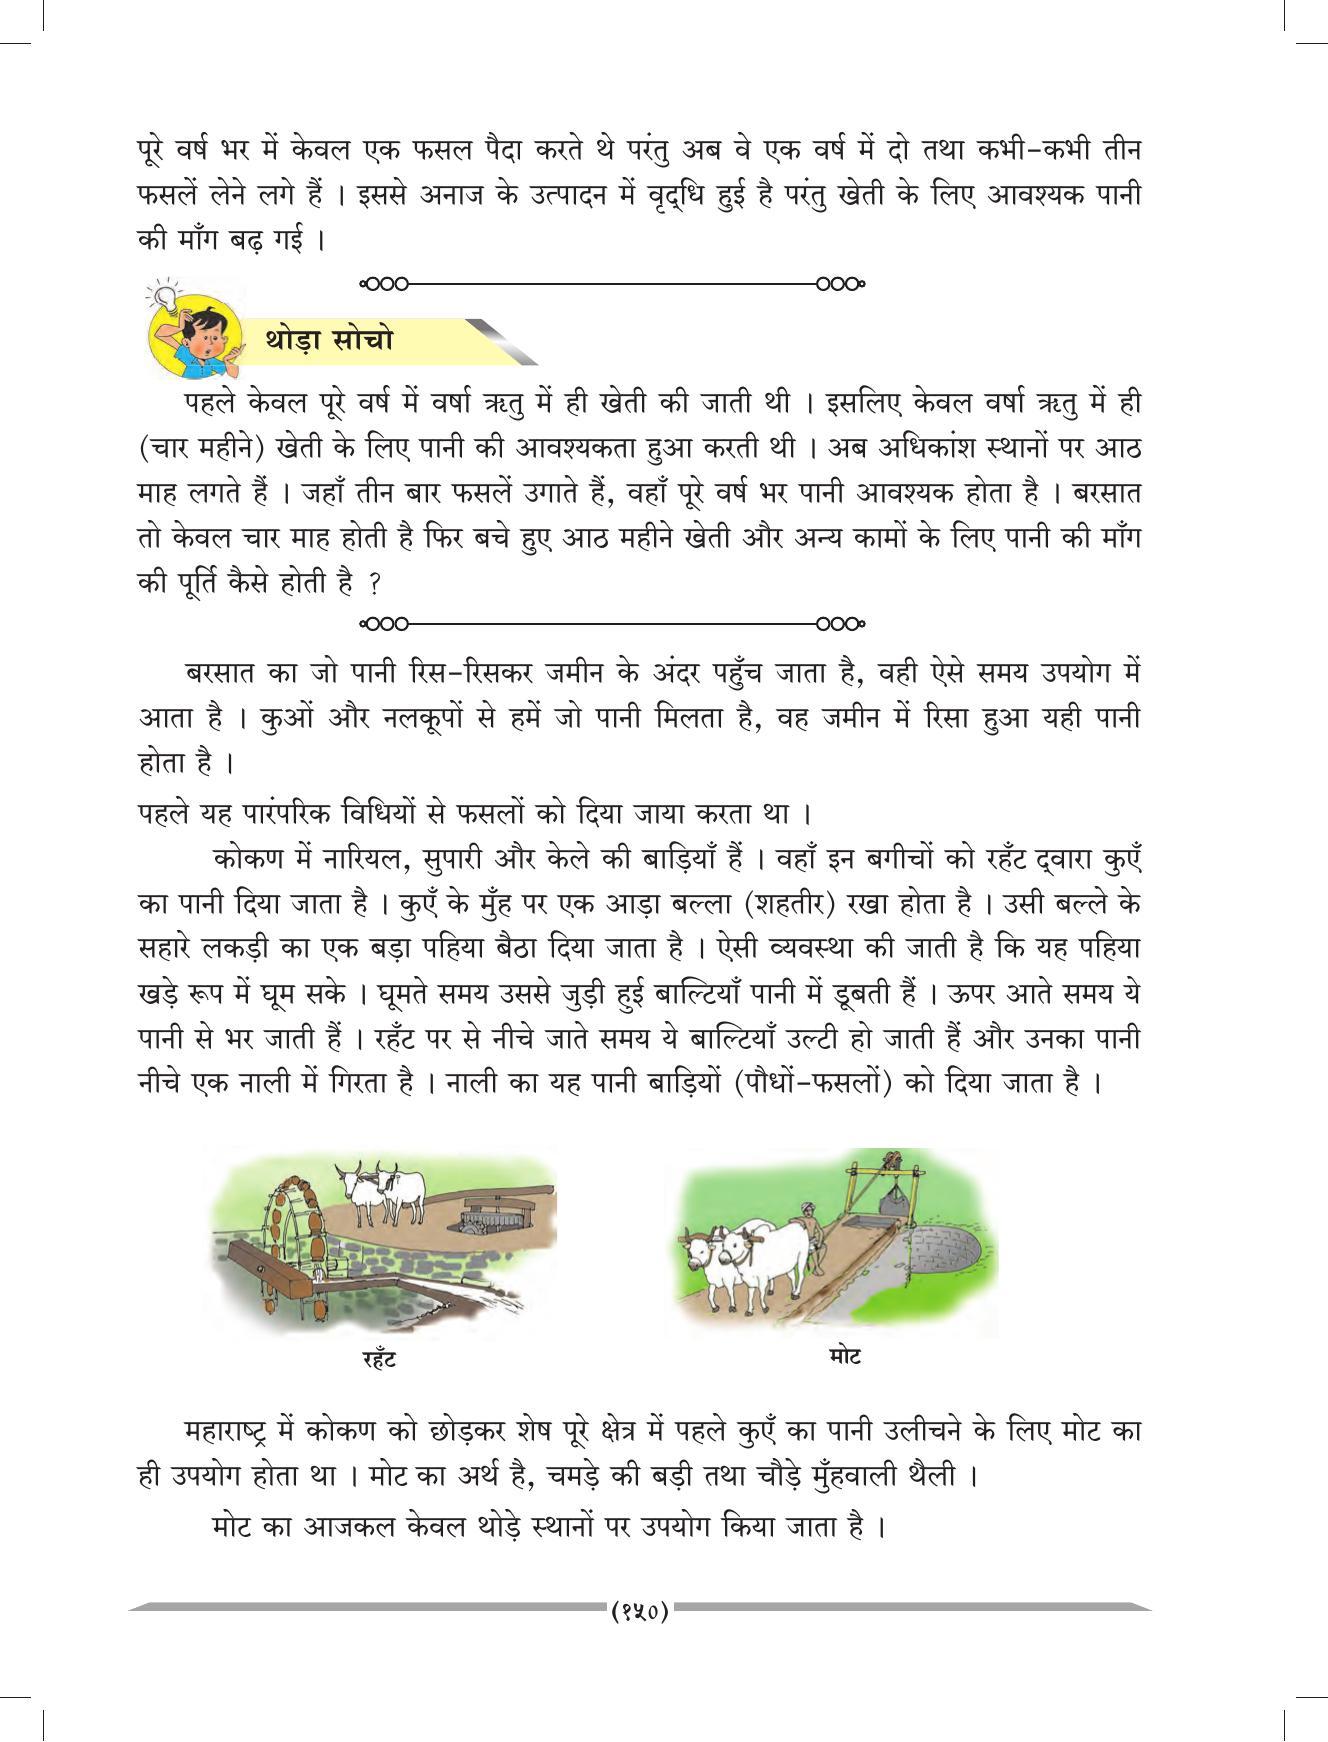 Maharashtra Board Class 4 EVS 1 (Hindi Medium) Textbook - Page 160